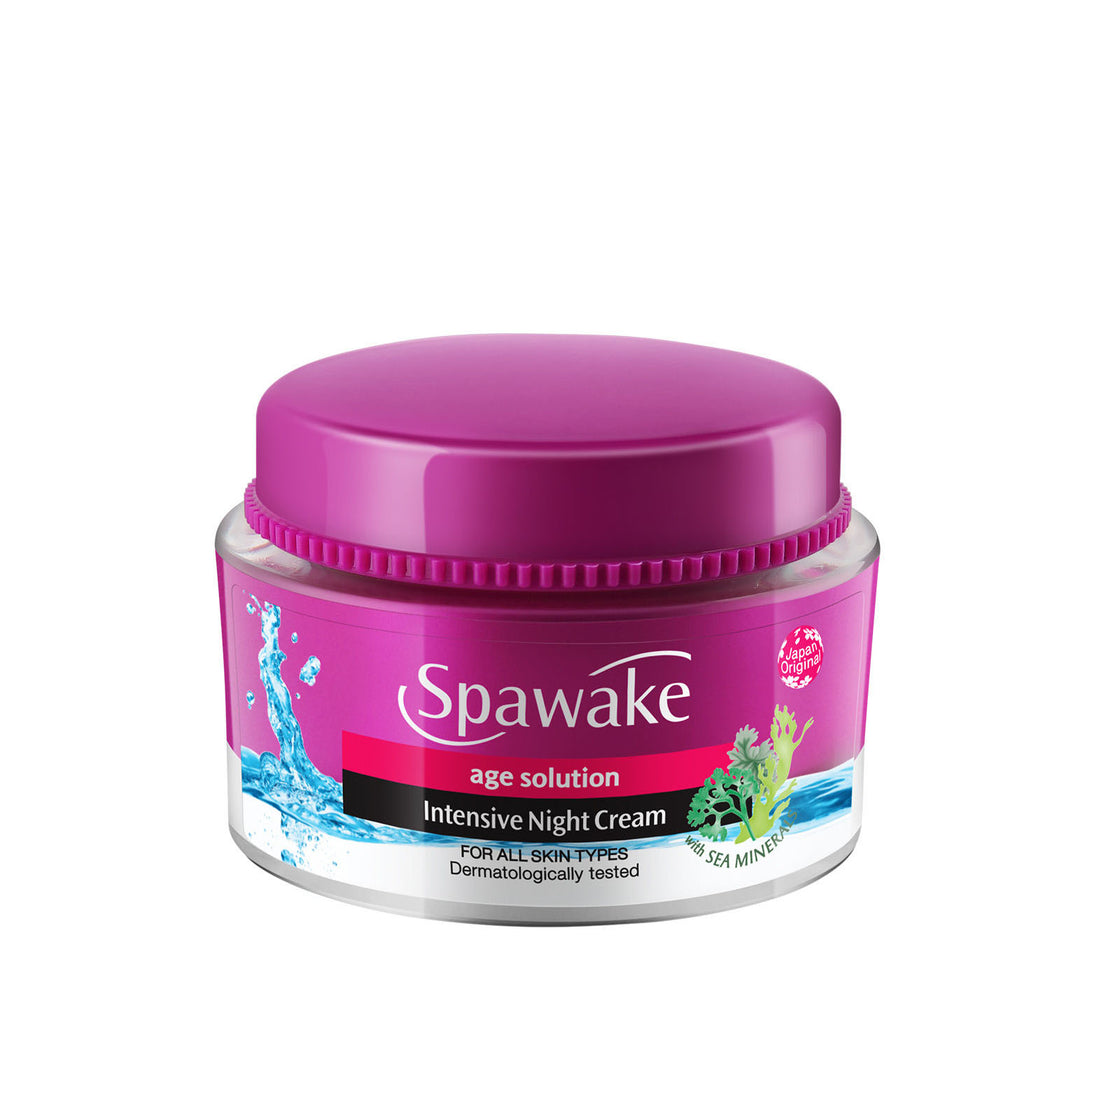 Spawake Age Solution Intensive Night Cream (50Gm)